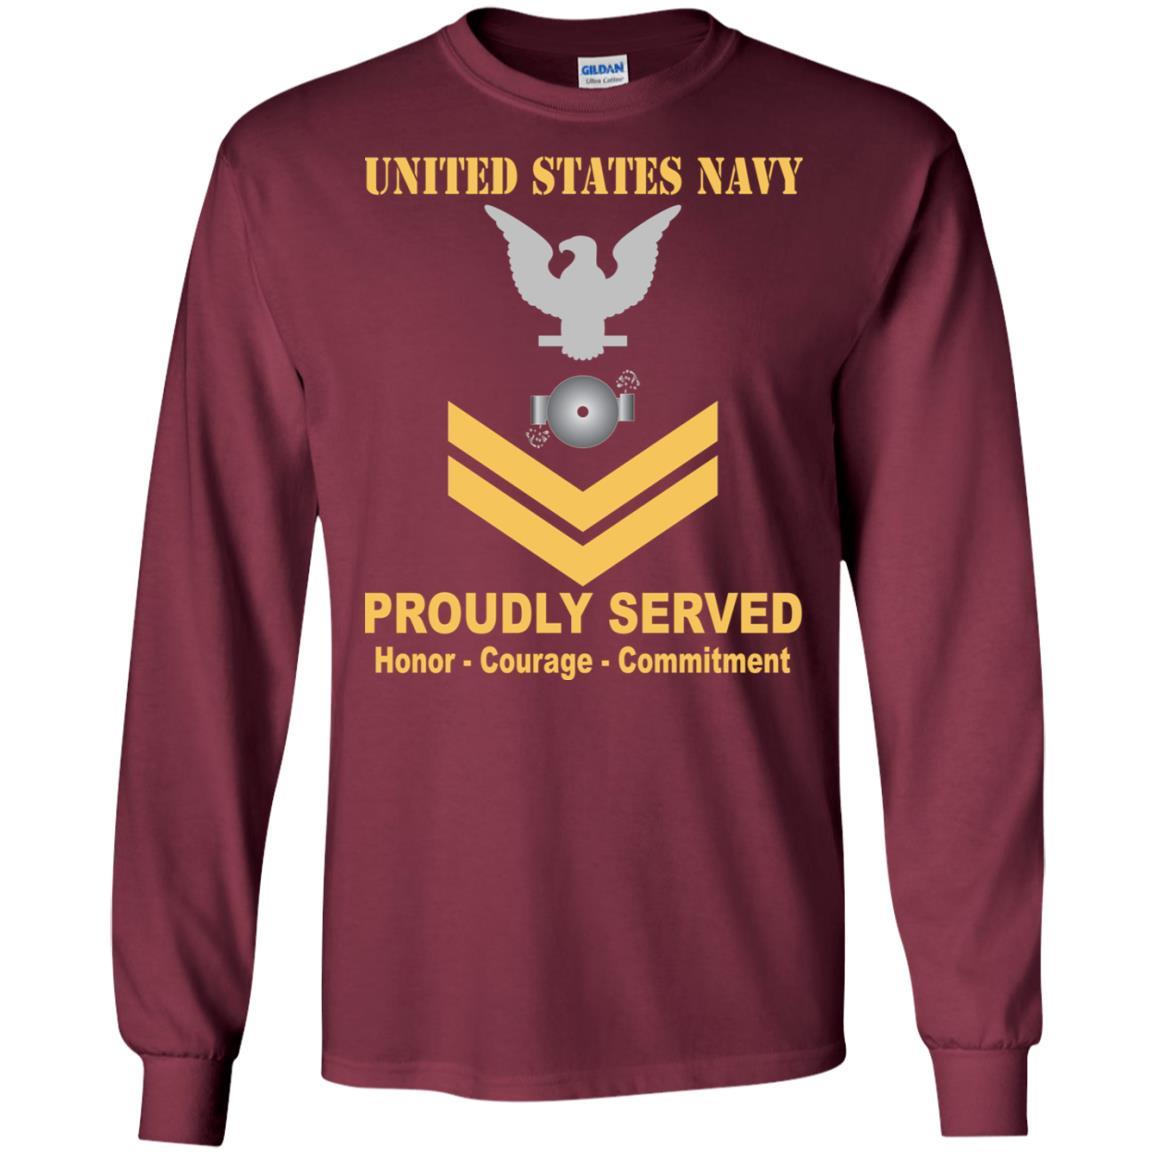 U.S Navy Boiler technician Navy BT E-5 Rating Badges Proudly Served T-Shirt For Men On Front-TShirt-Navy-Veterans Nation